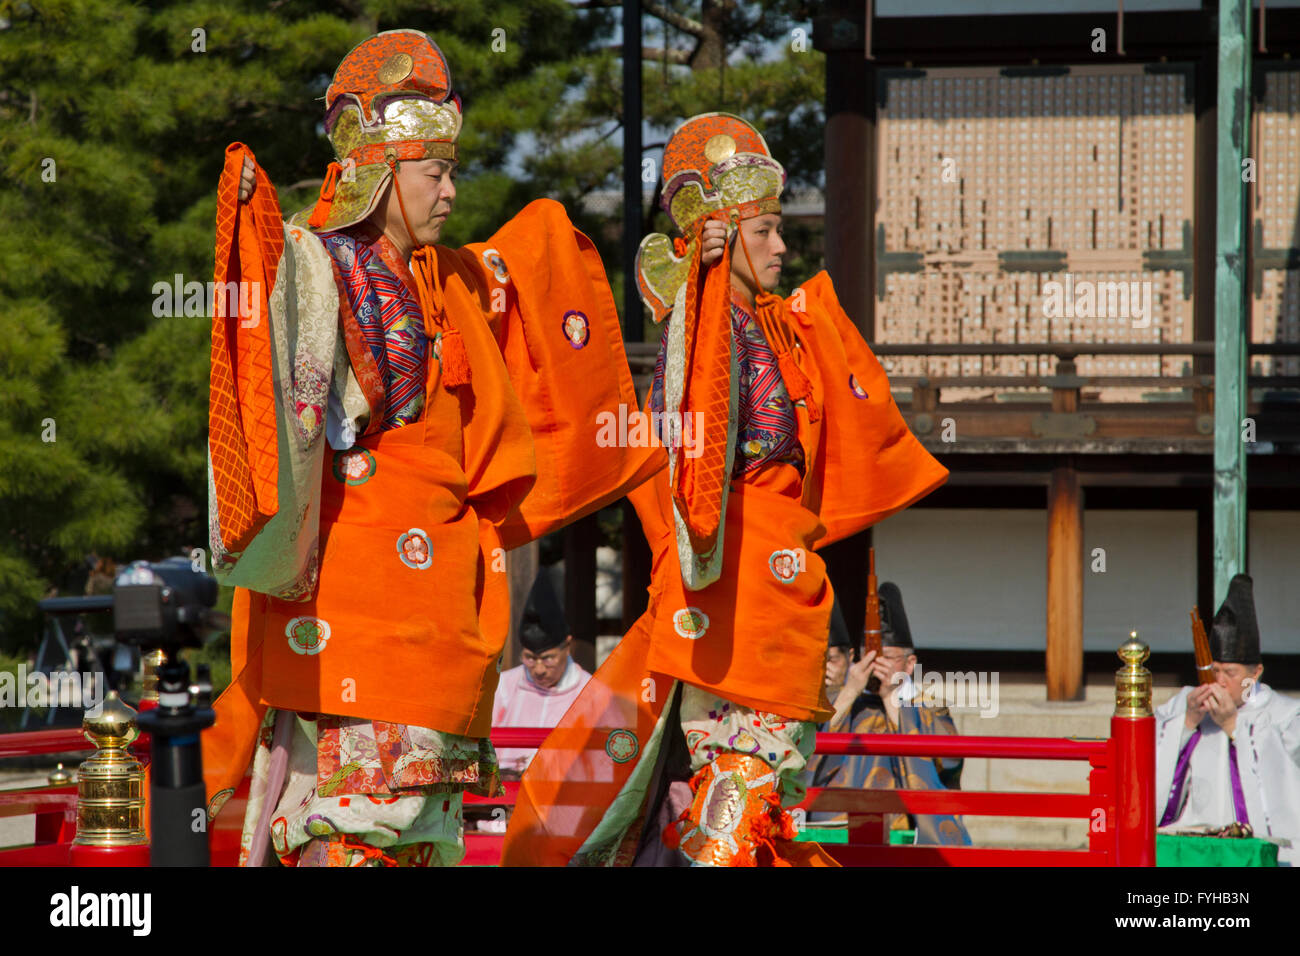 Japan, Kyoto, Imperial Palace, Mann tragen traditionelle japanische Kleidung Jidai Matsuri (Festival of Ages) Stockfoto